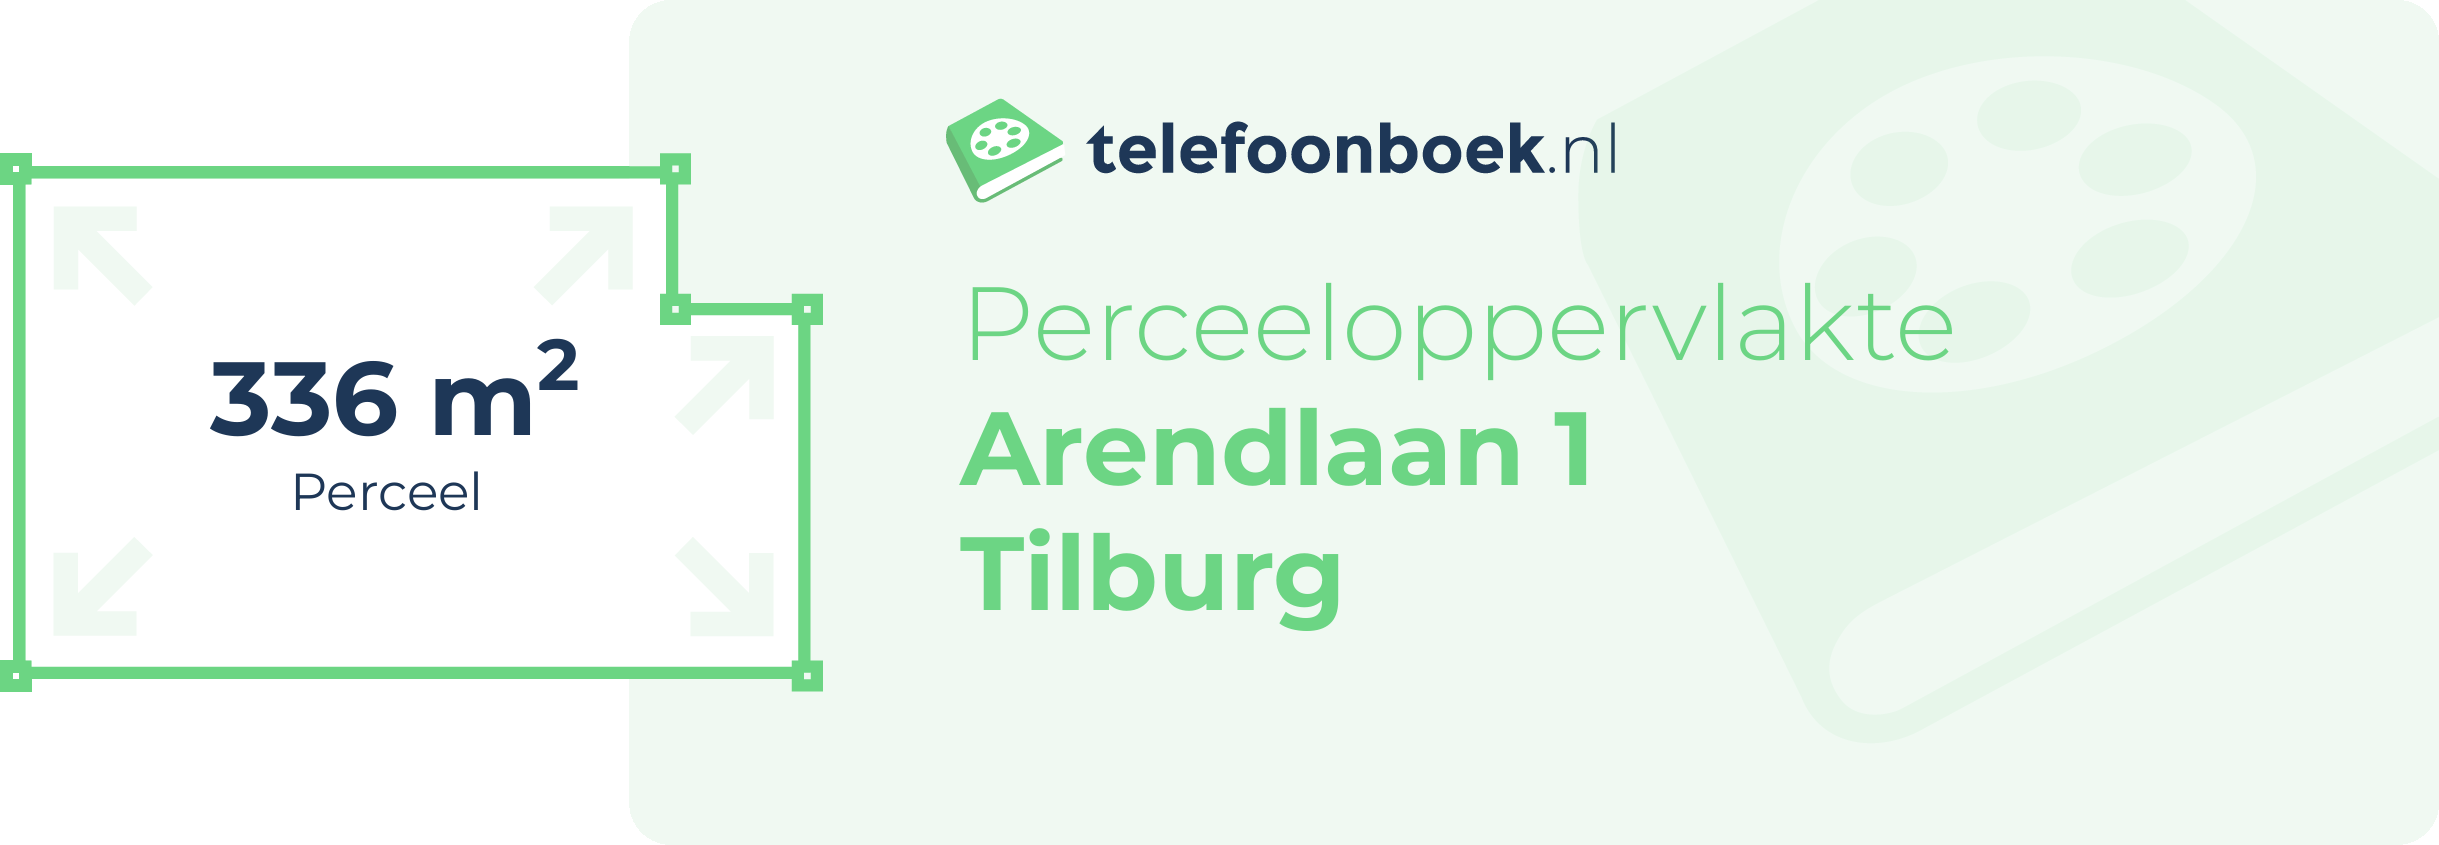 Perceeloppervlakte Arendlaan 1 Tilburg